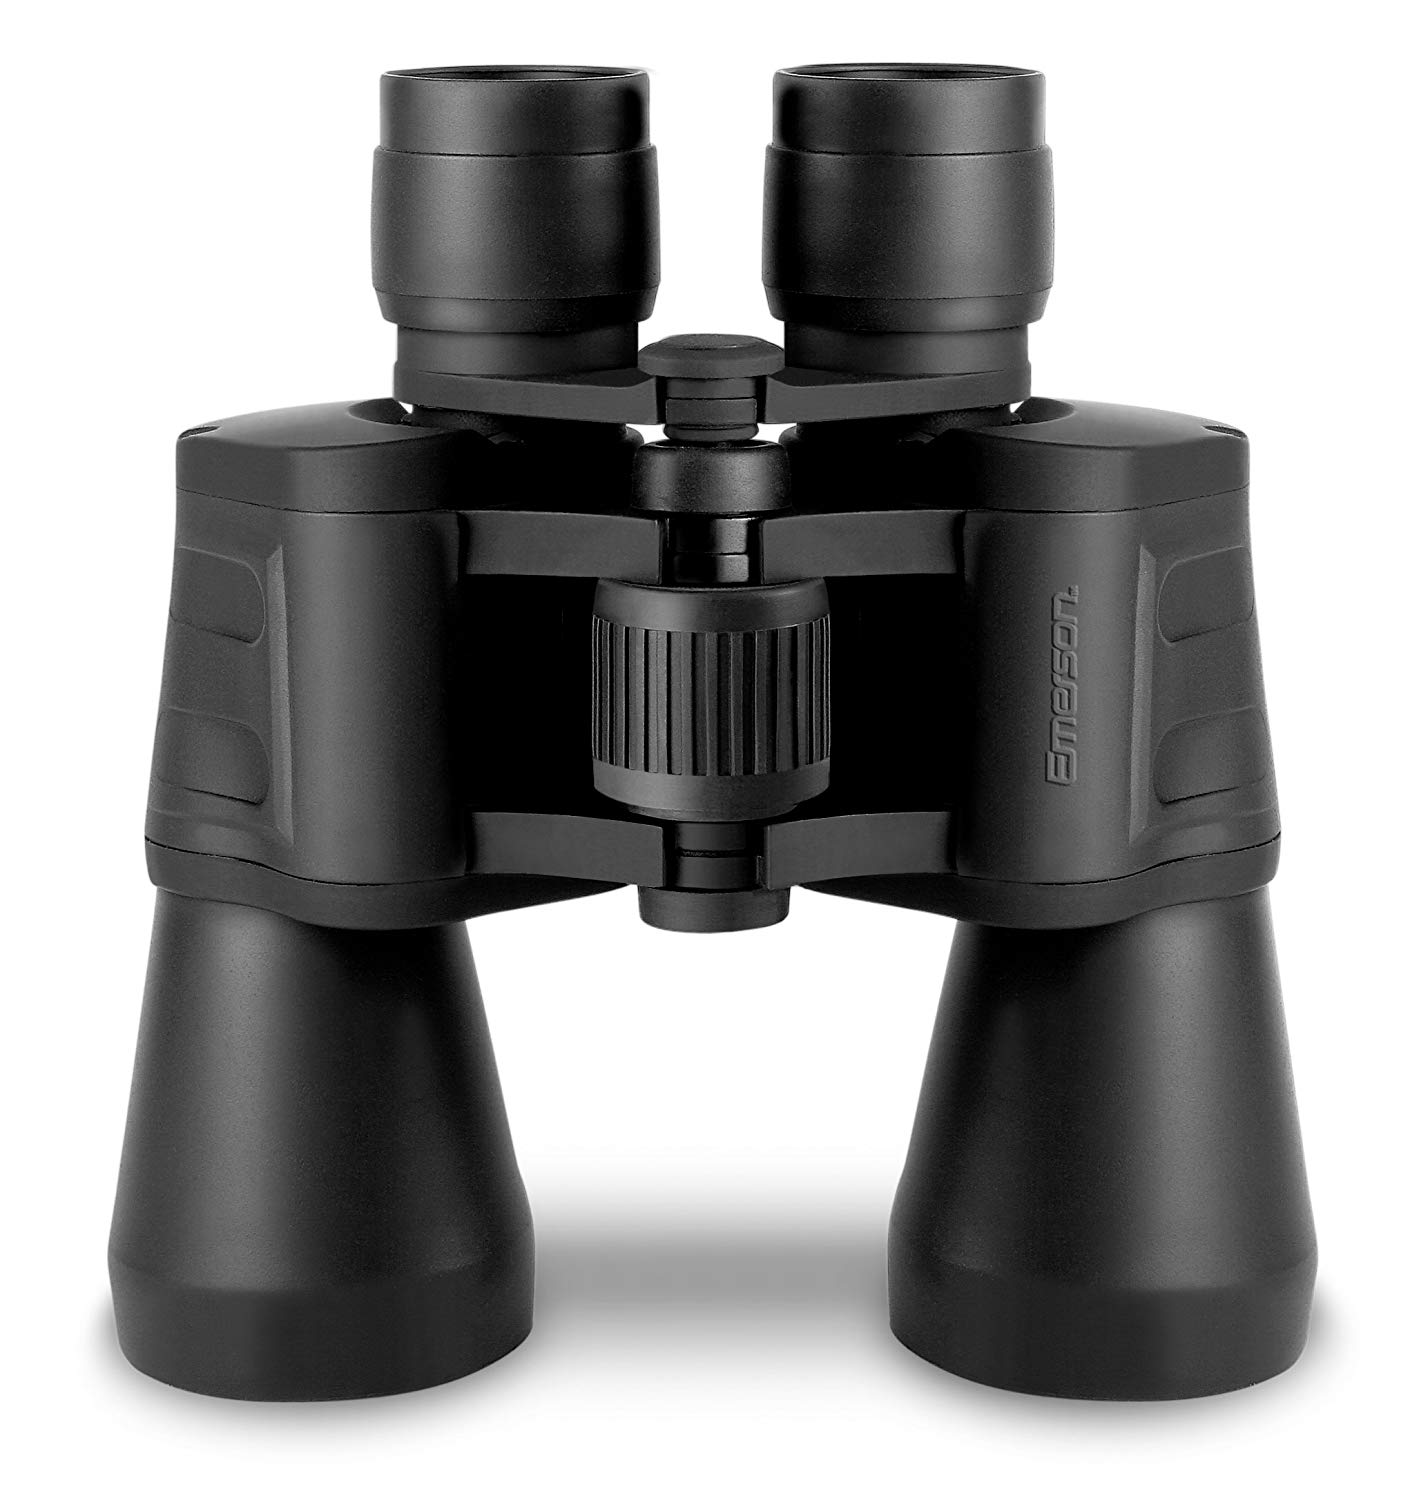 Amazon.com: Emerson 7x50 Binoculars: Sports & Outdoors